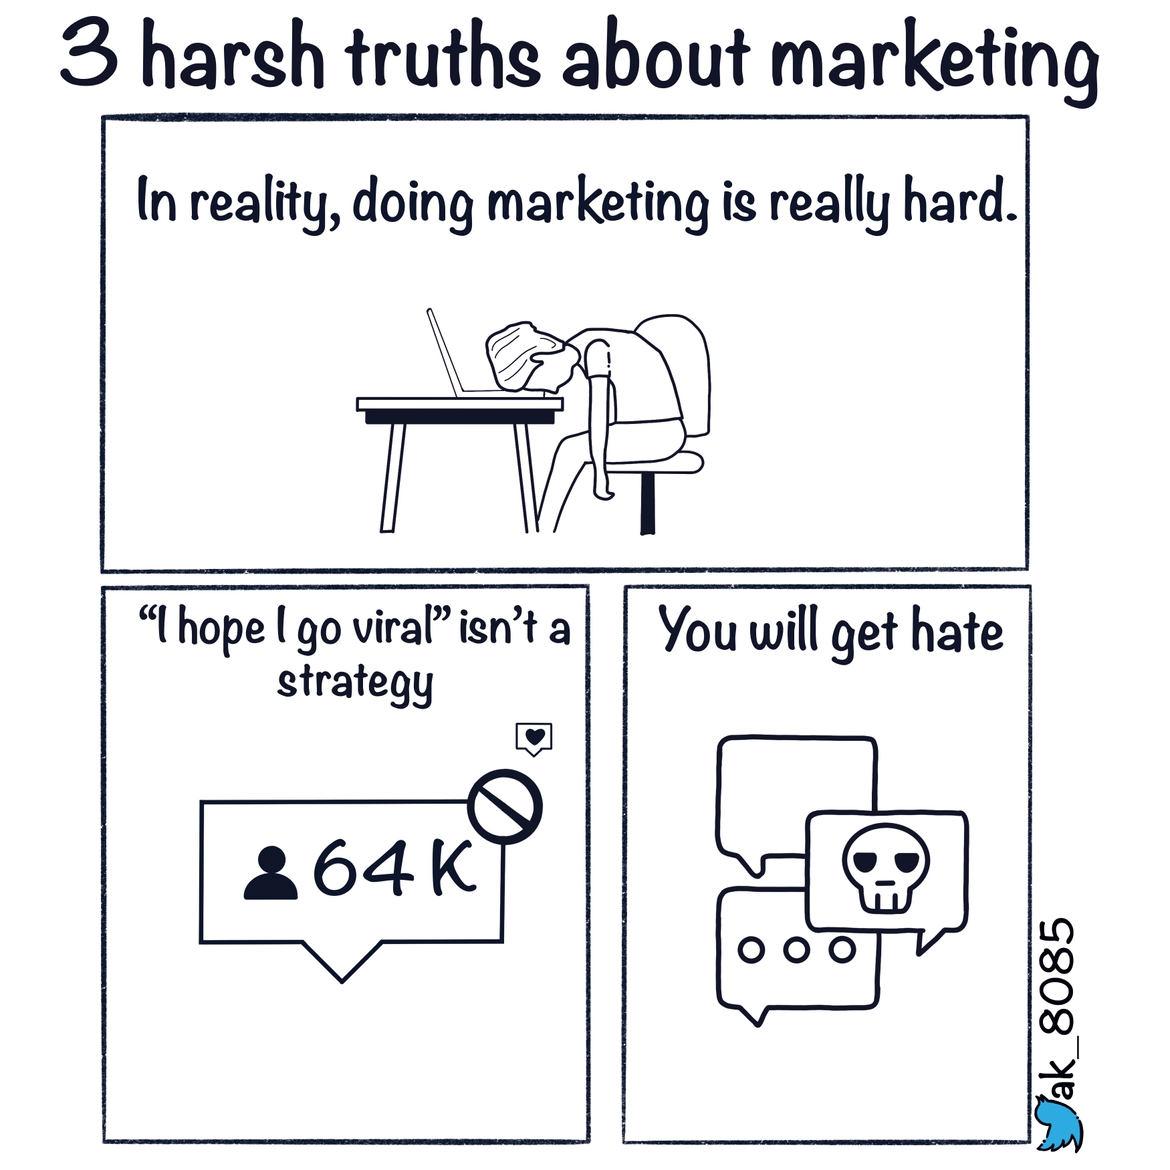 Hrash truth about Marketing.